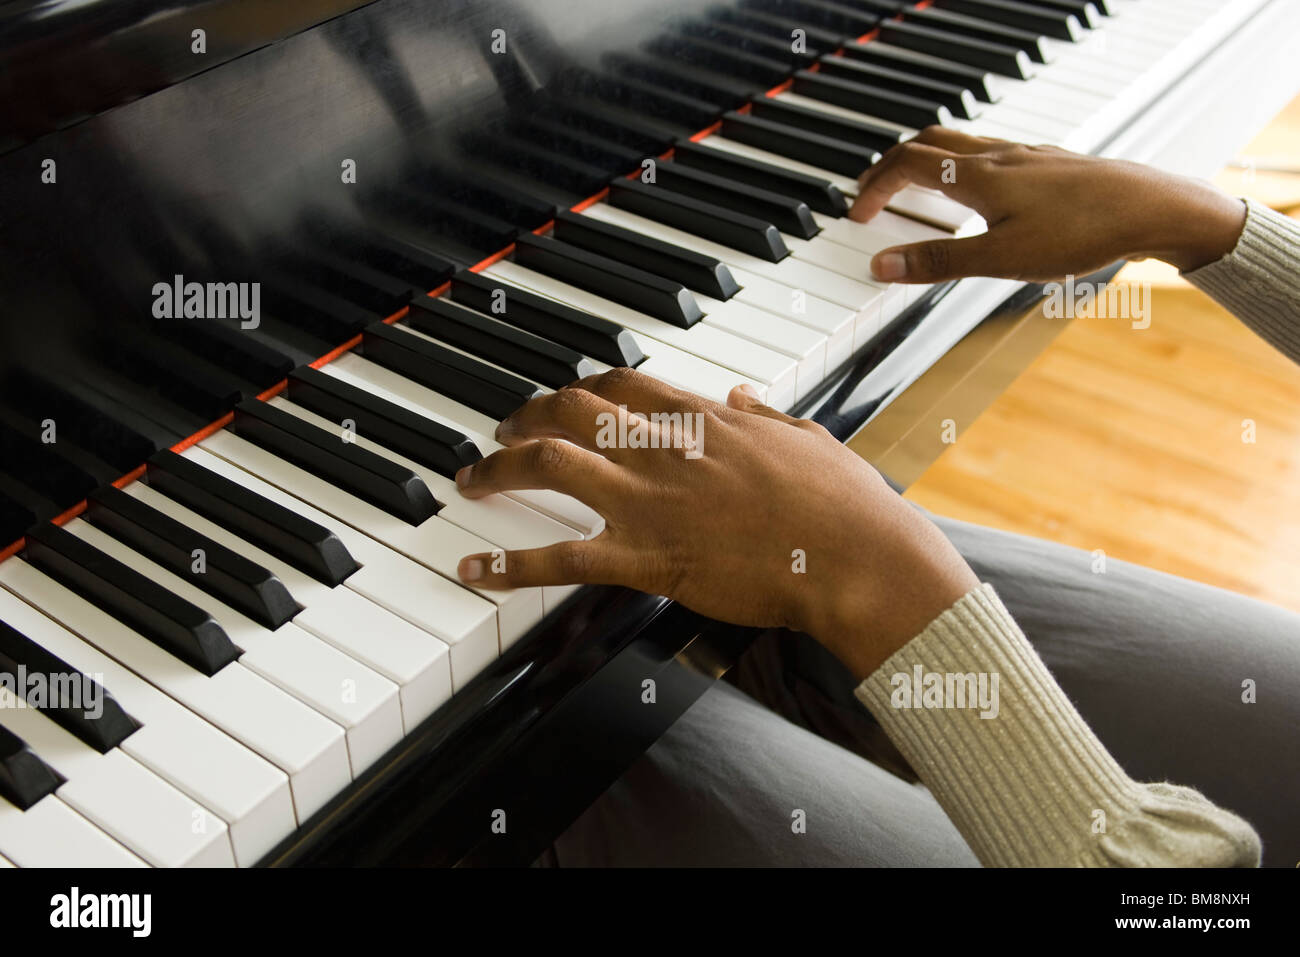 Playing piano Stock Photo